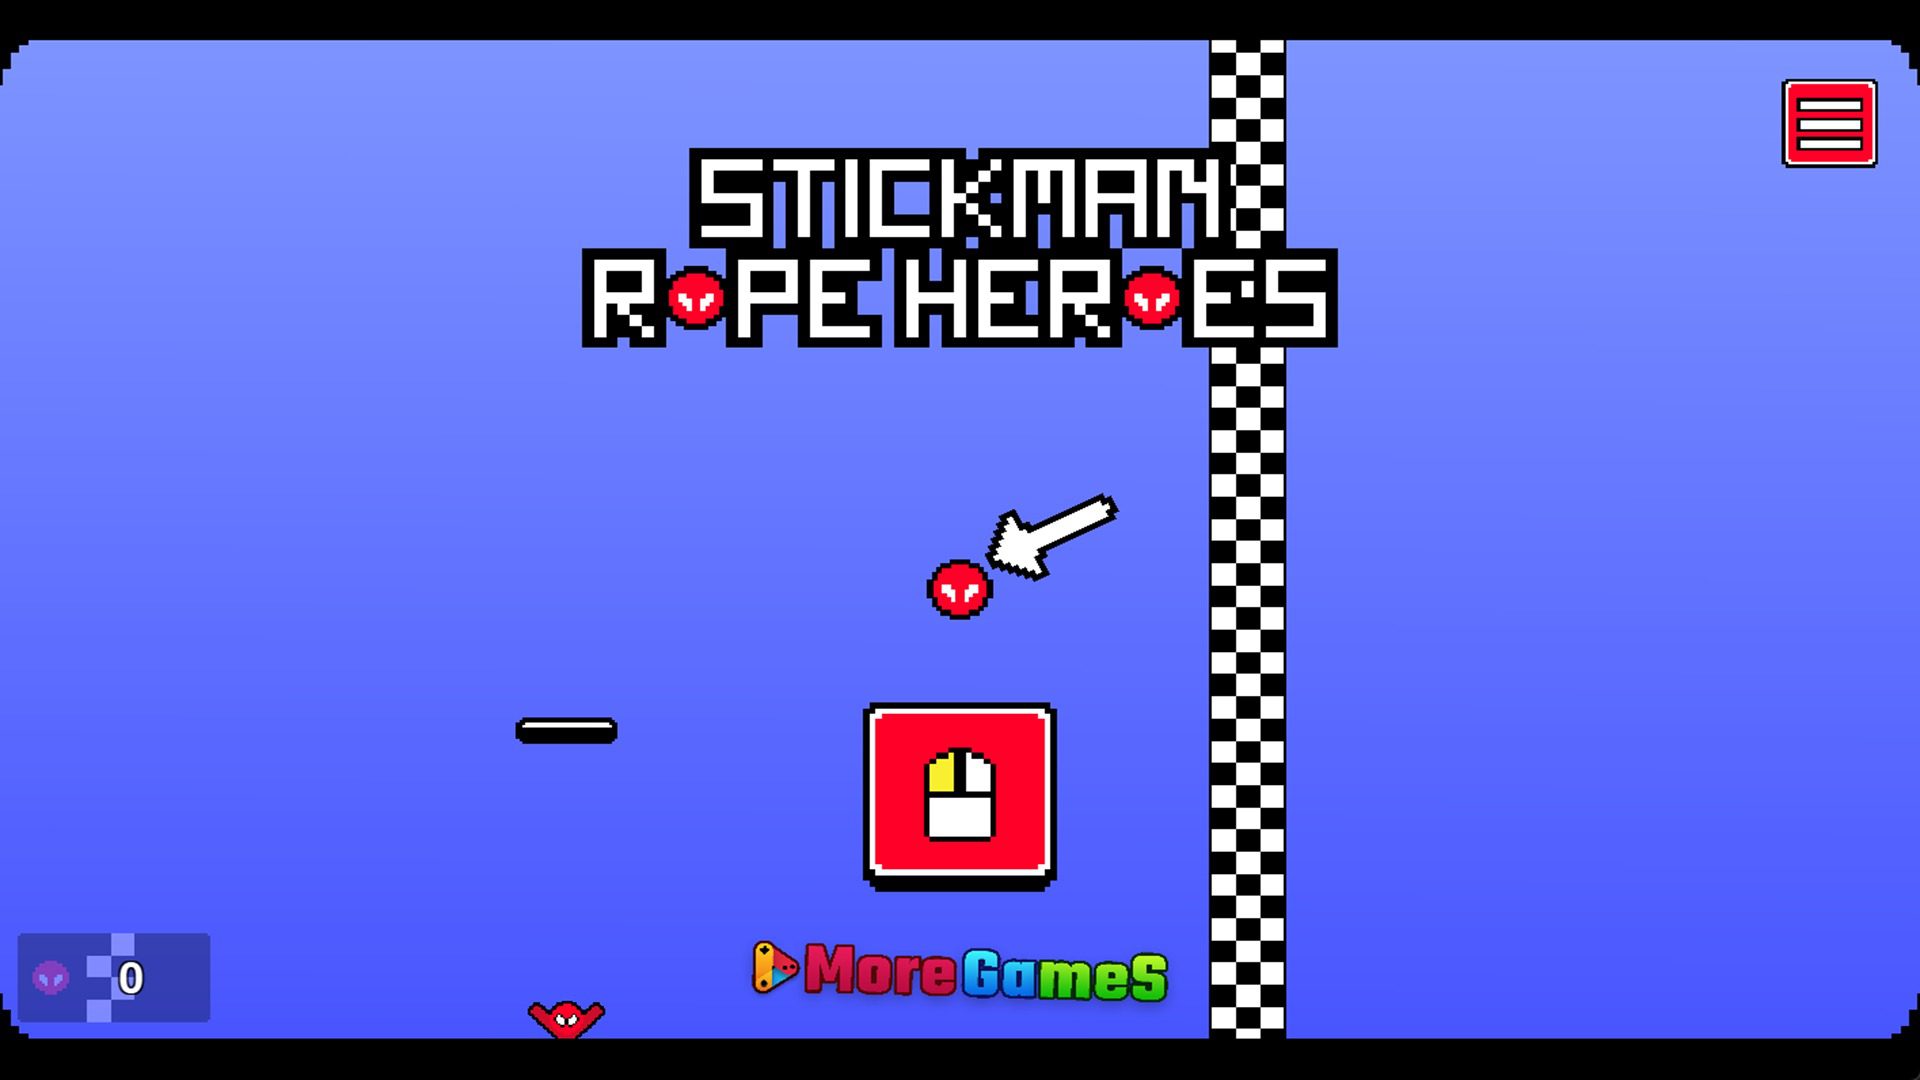 Stick Man Hook: Play Stick Man Hook for free on LittleGames